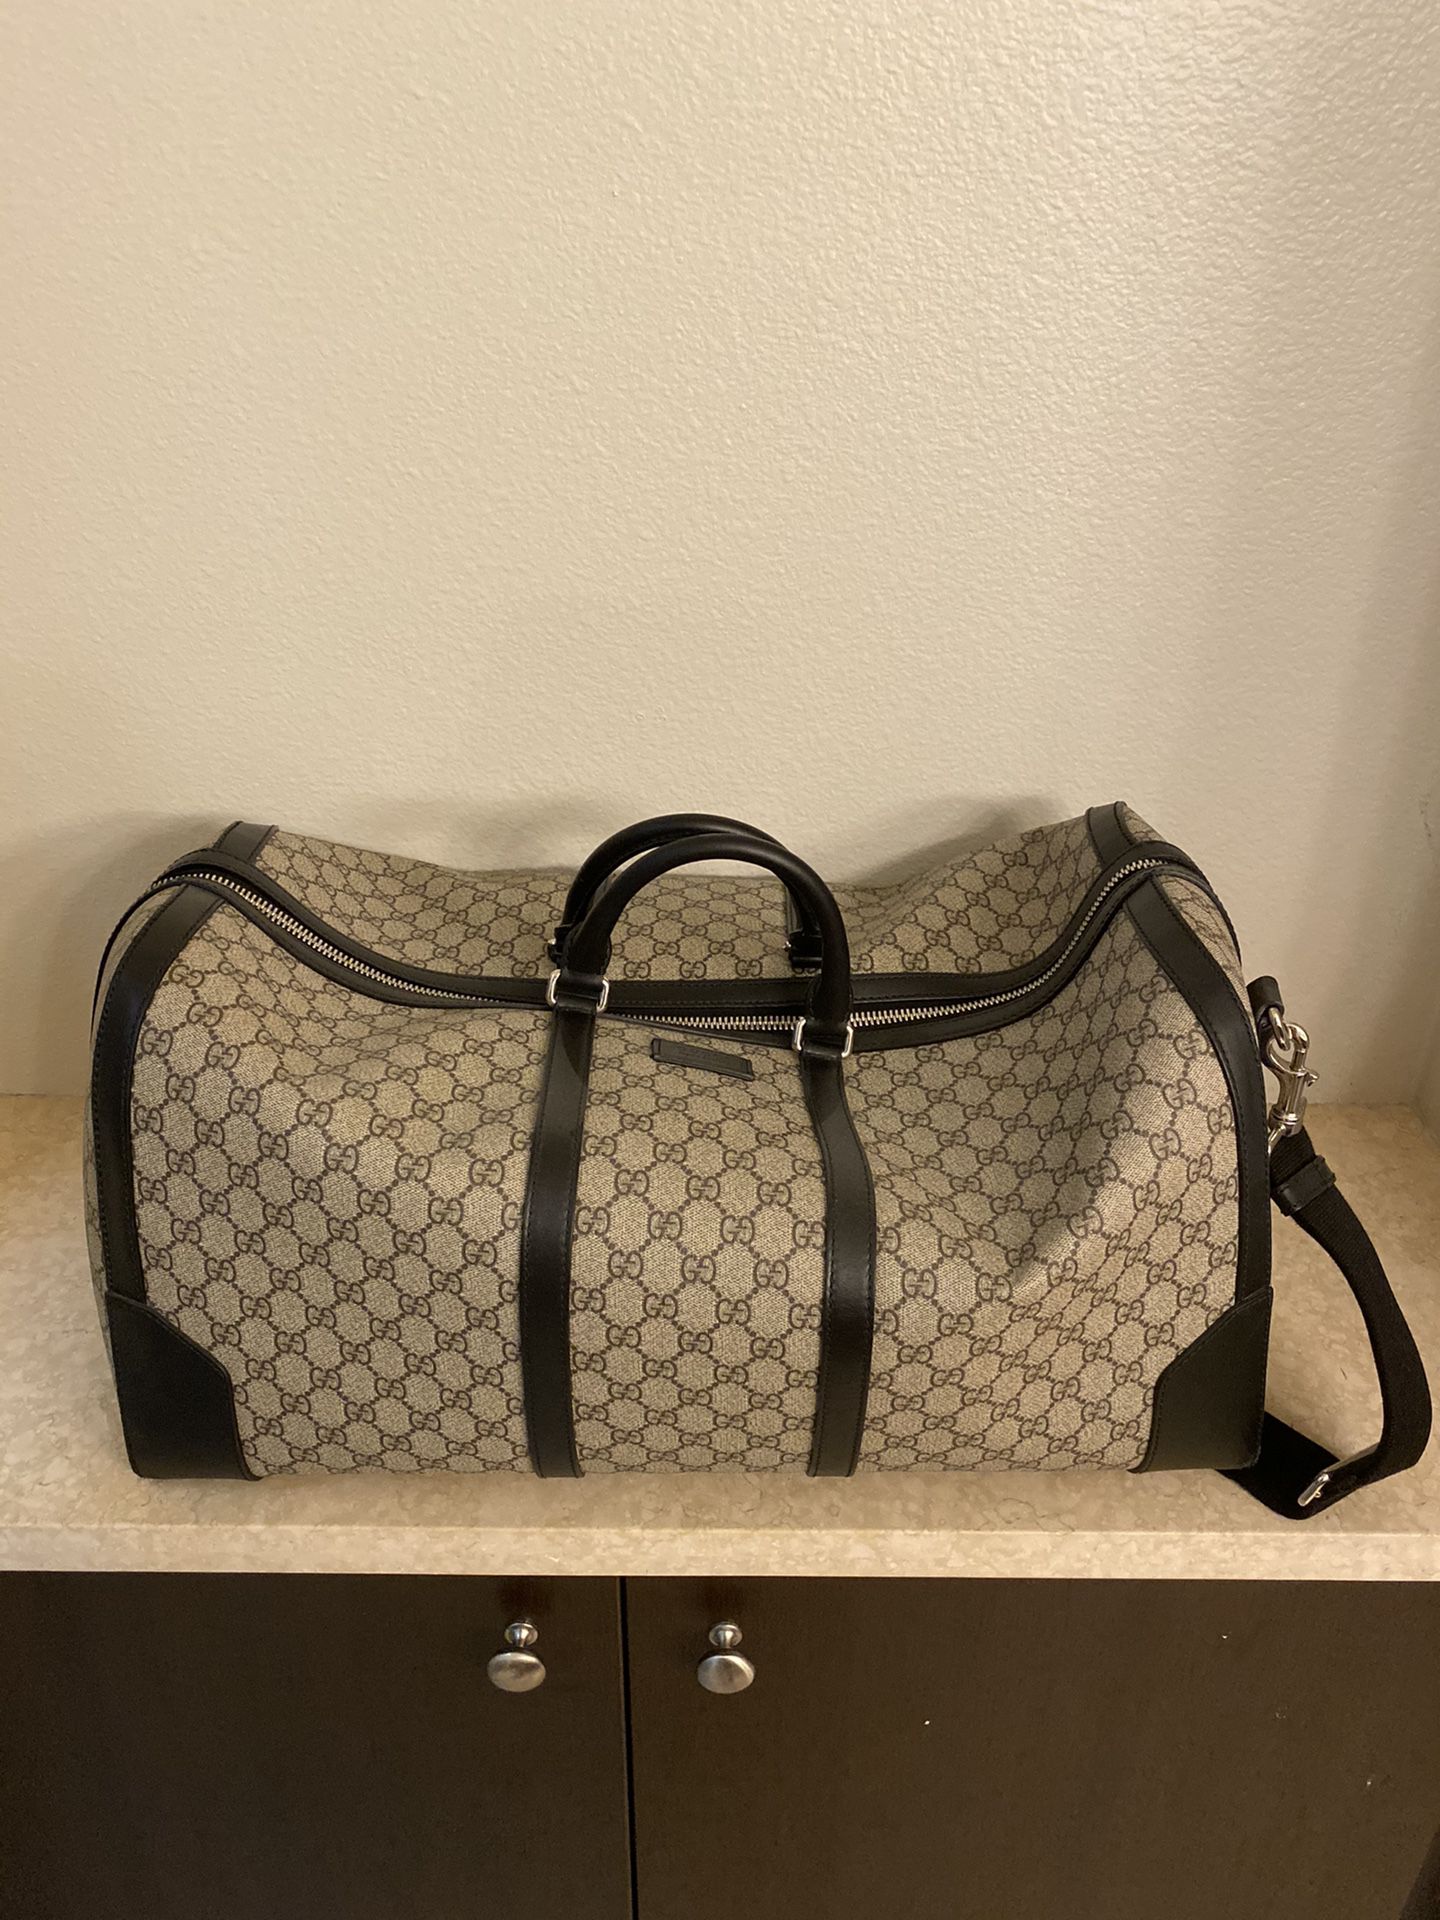 Men’s Gucci GG supreme large duffle bag